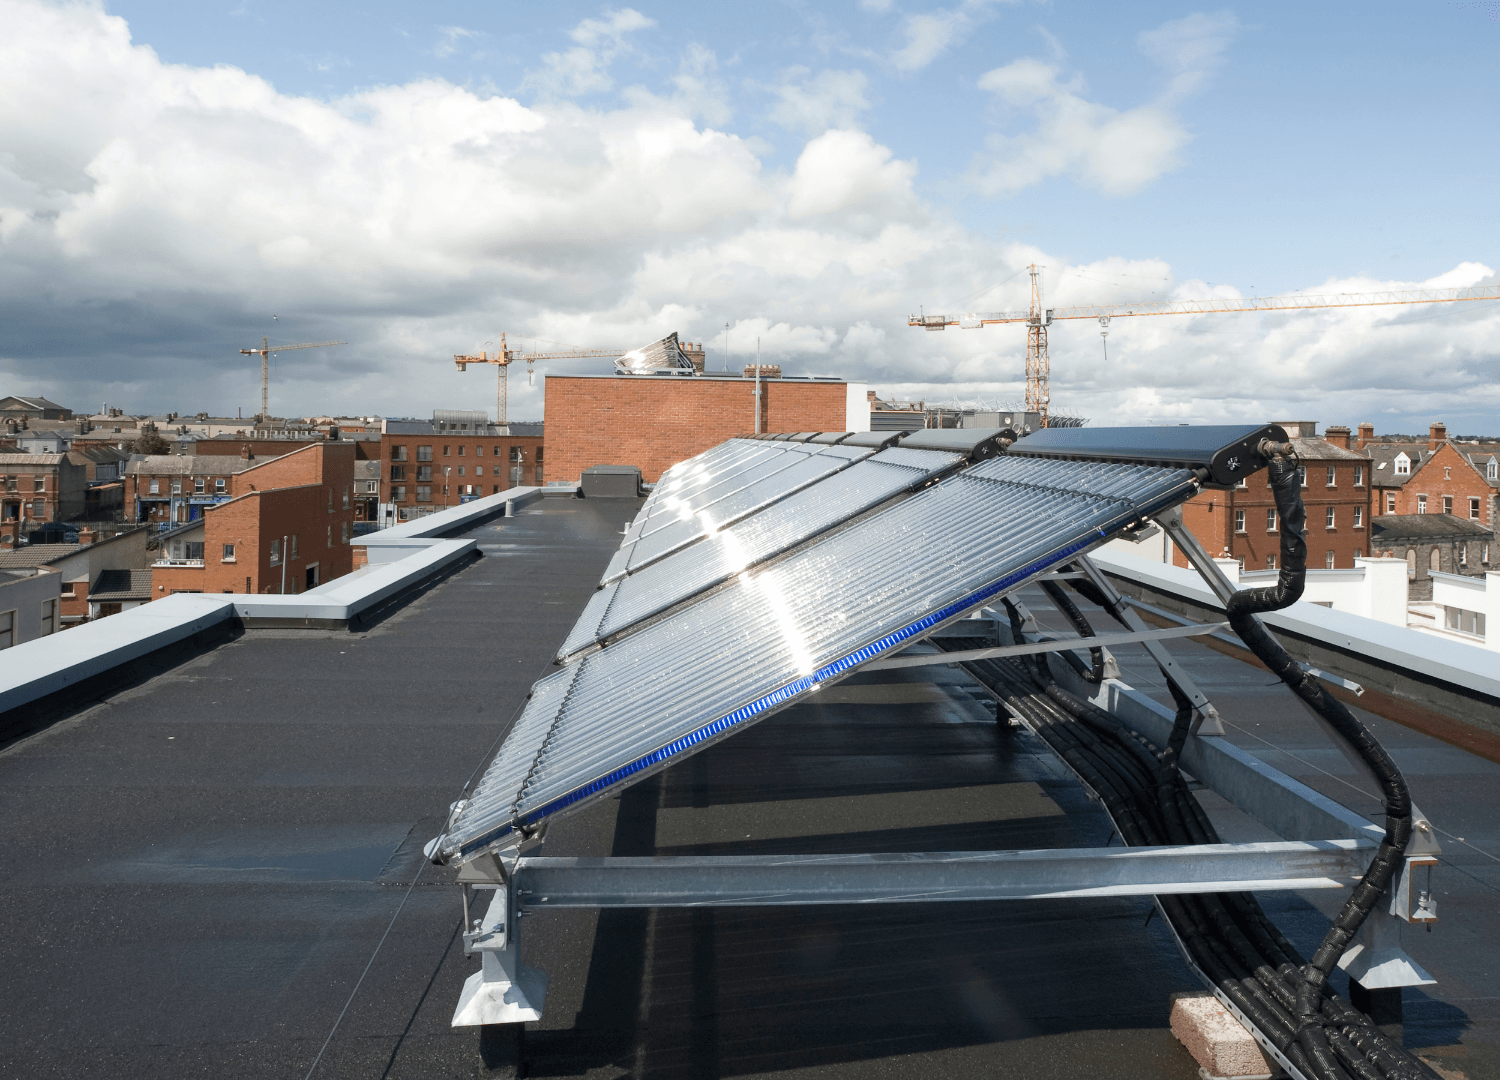 saint charles solar installation, solar array, solar panels